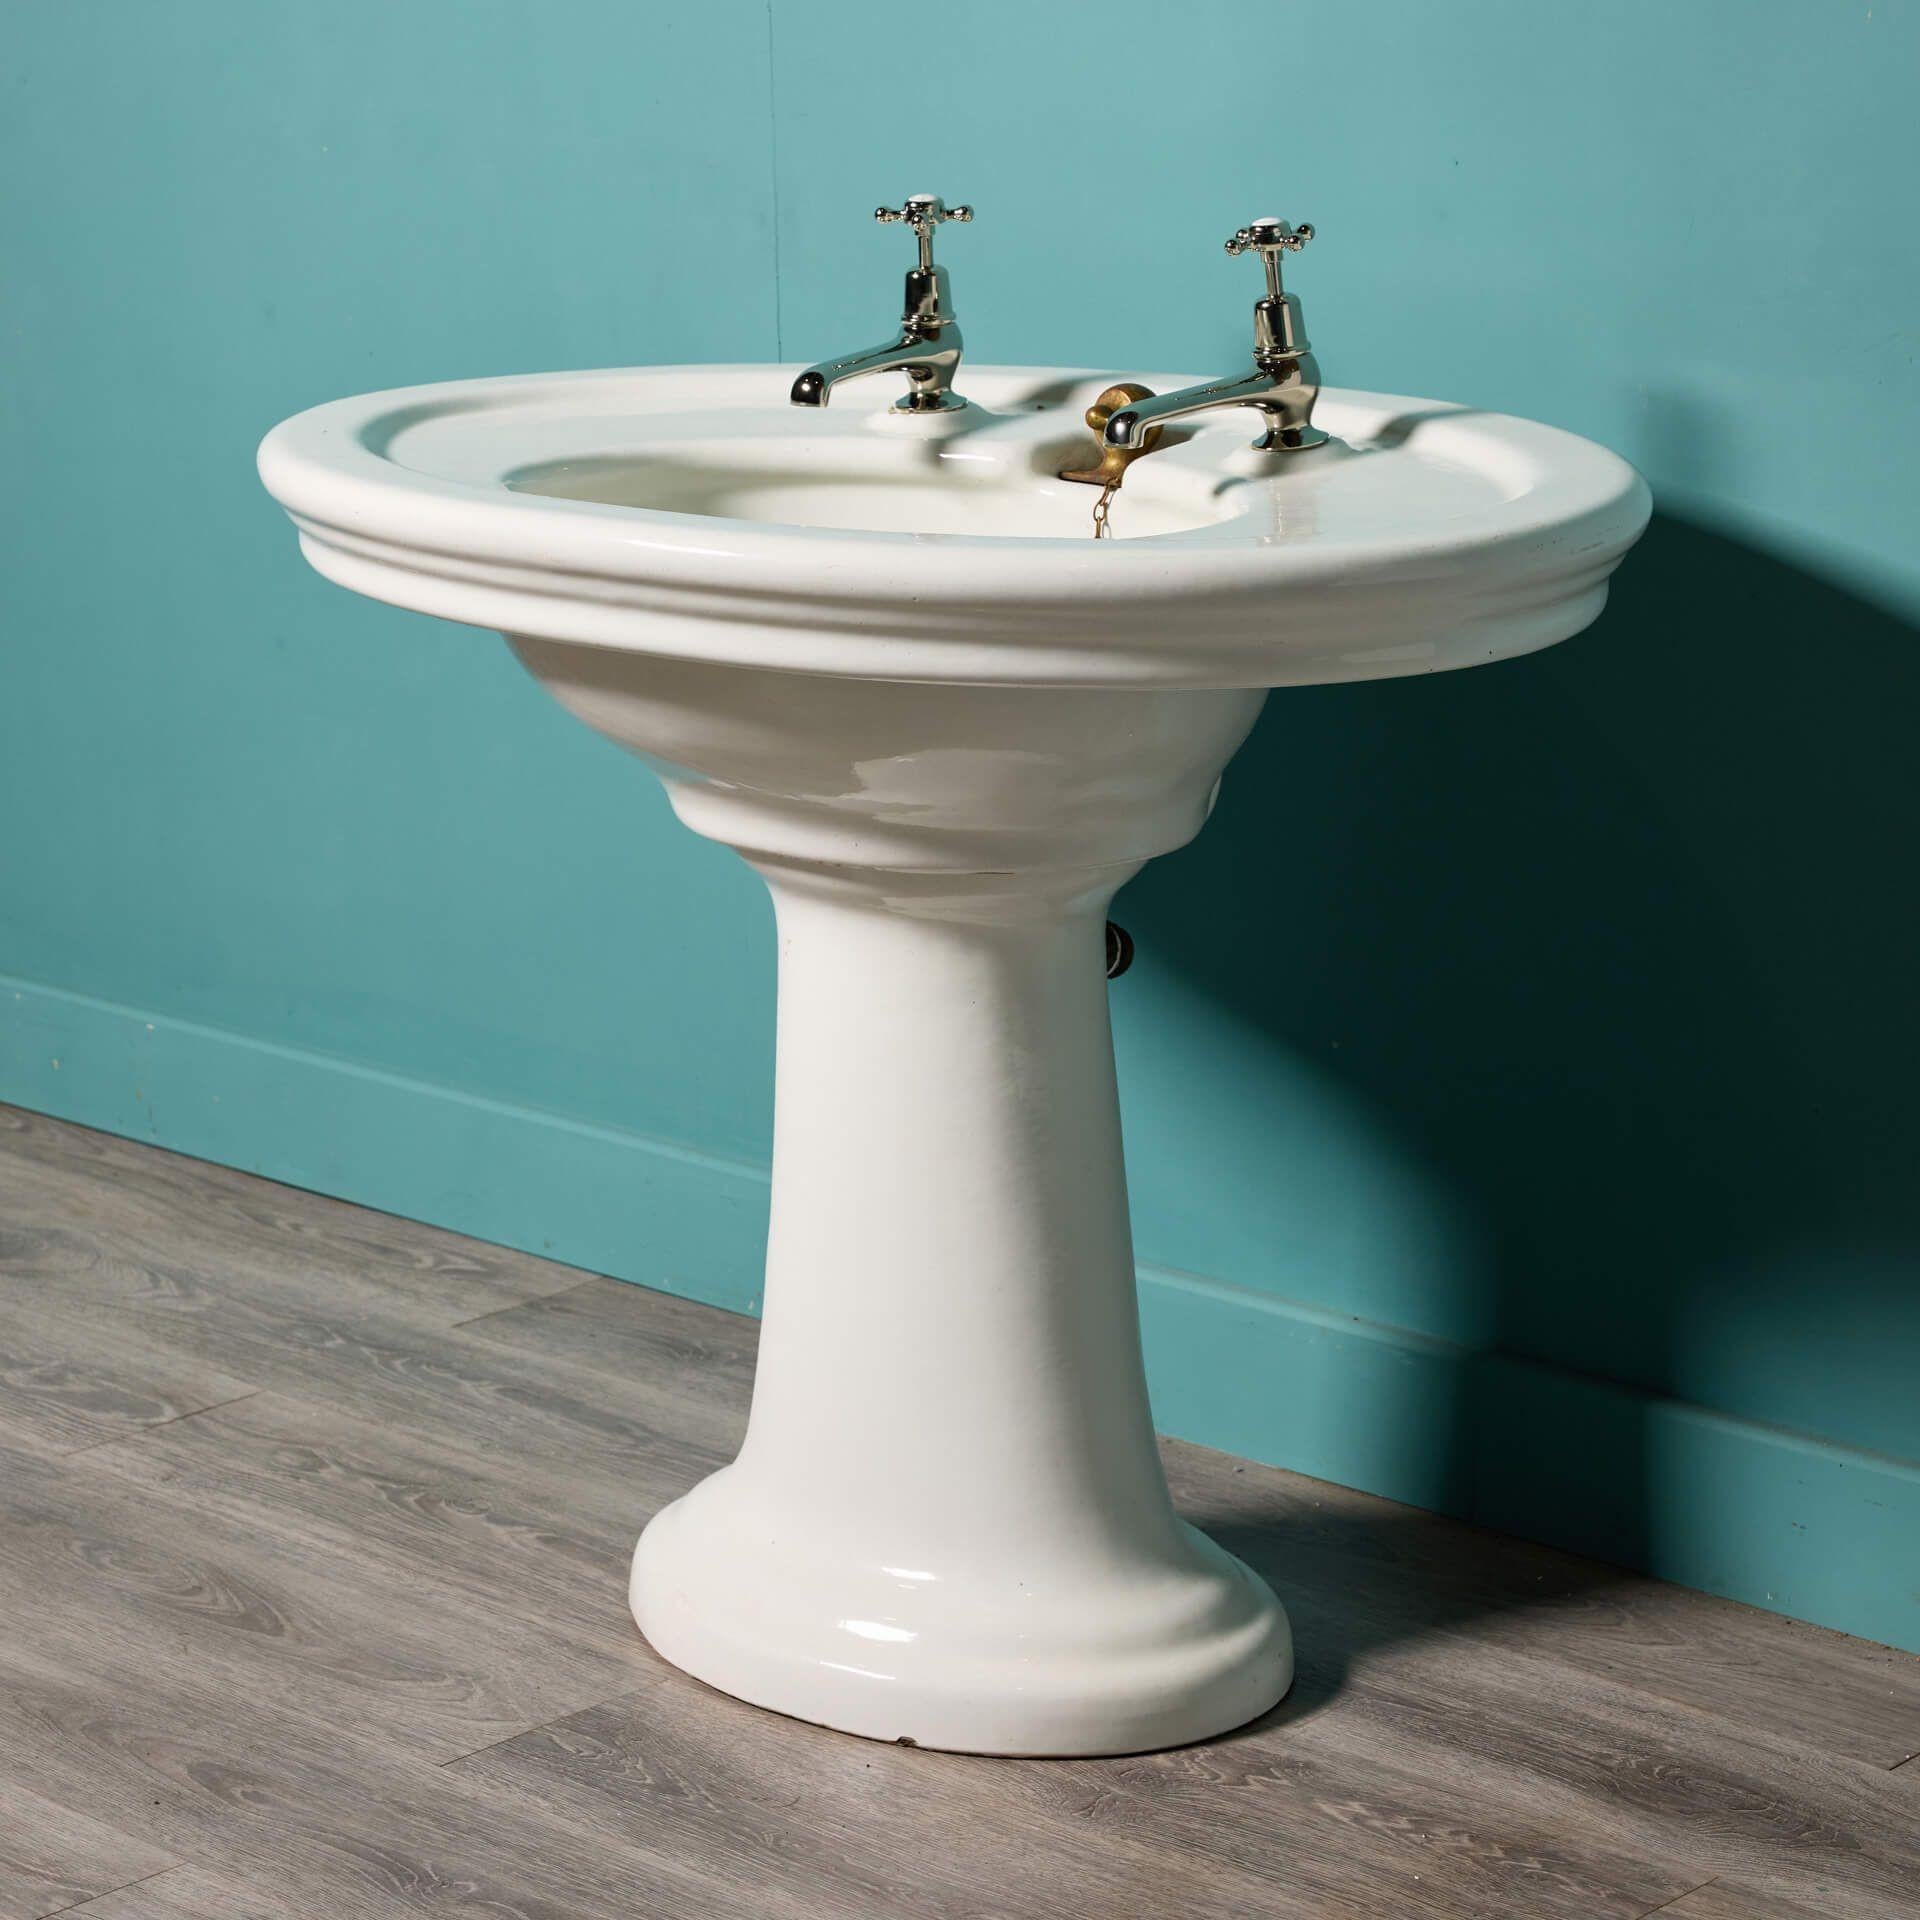 English Antique Oval Shaped Pedestal Sink For Sale